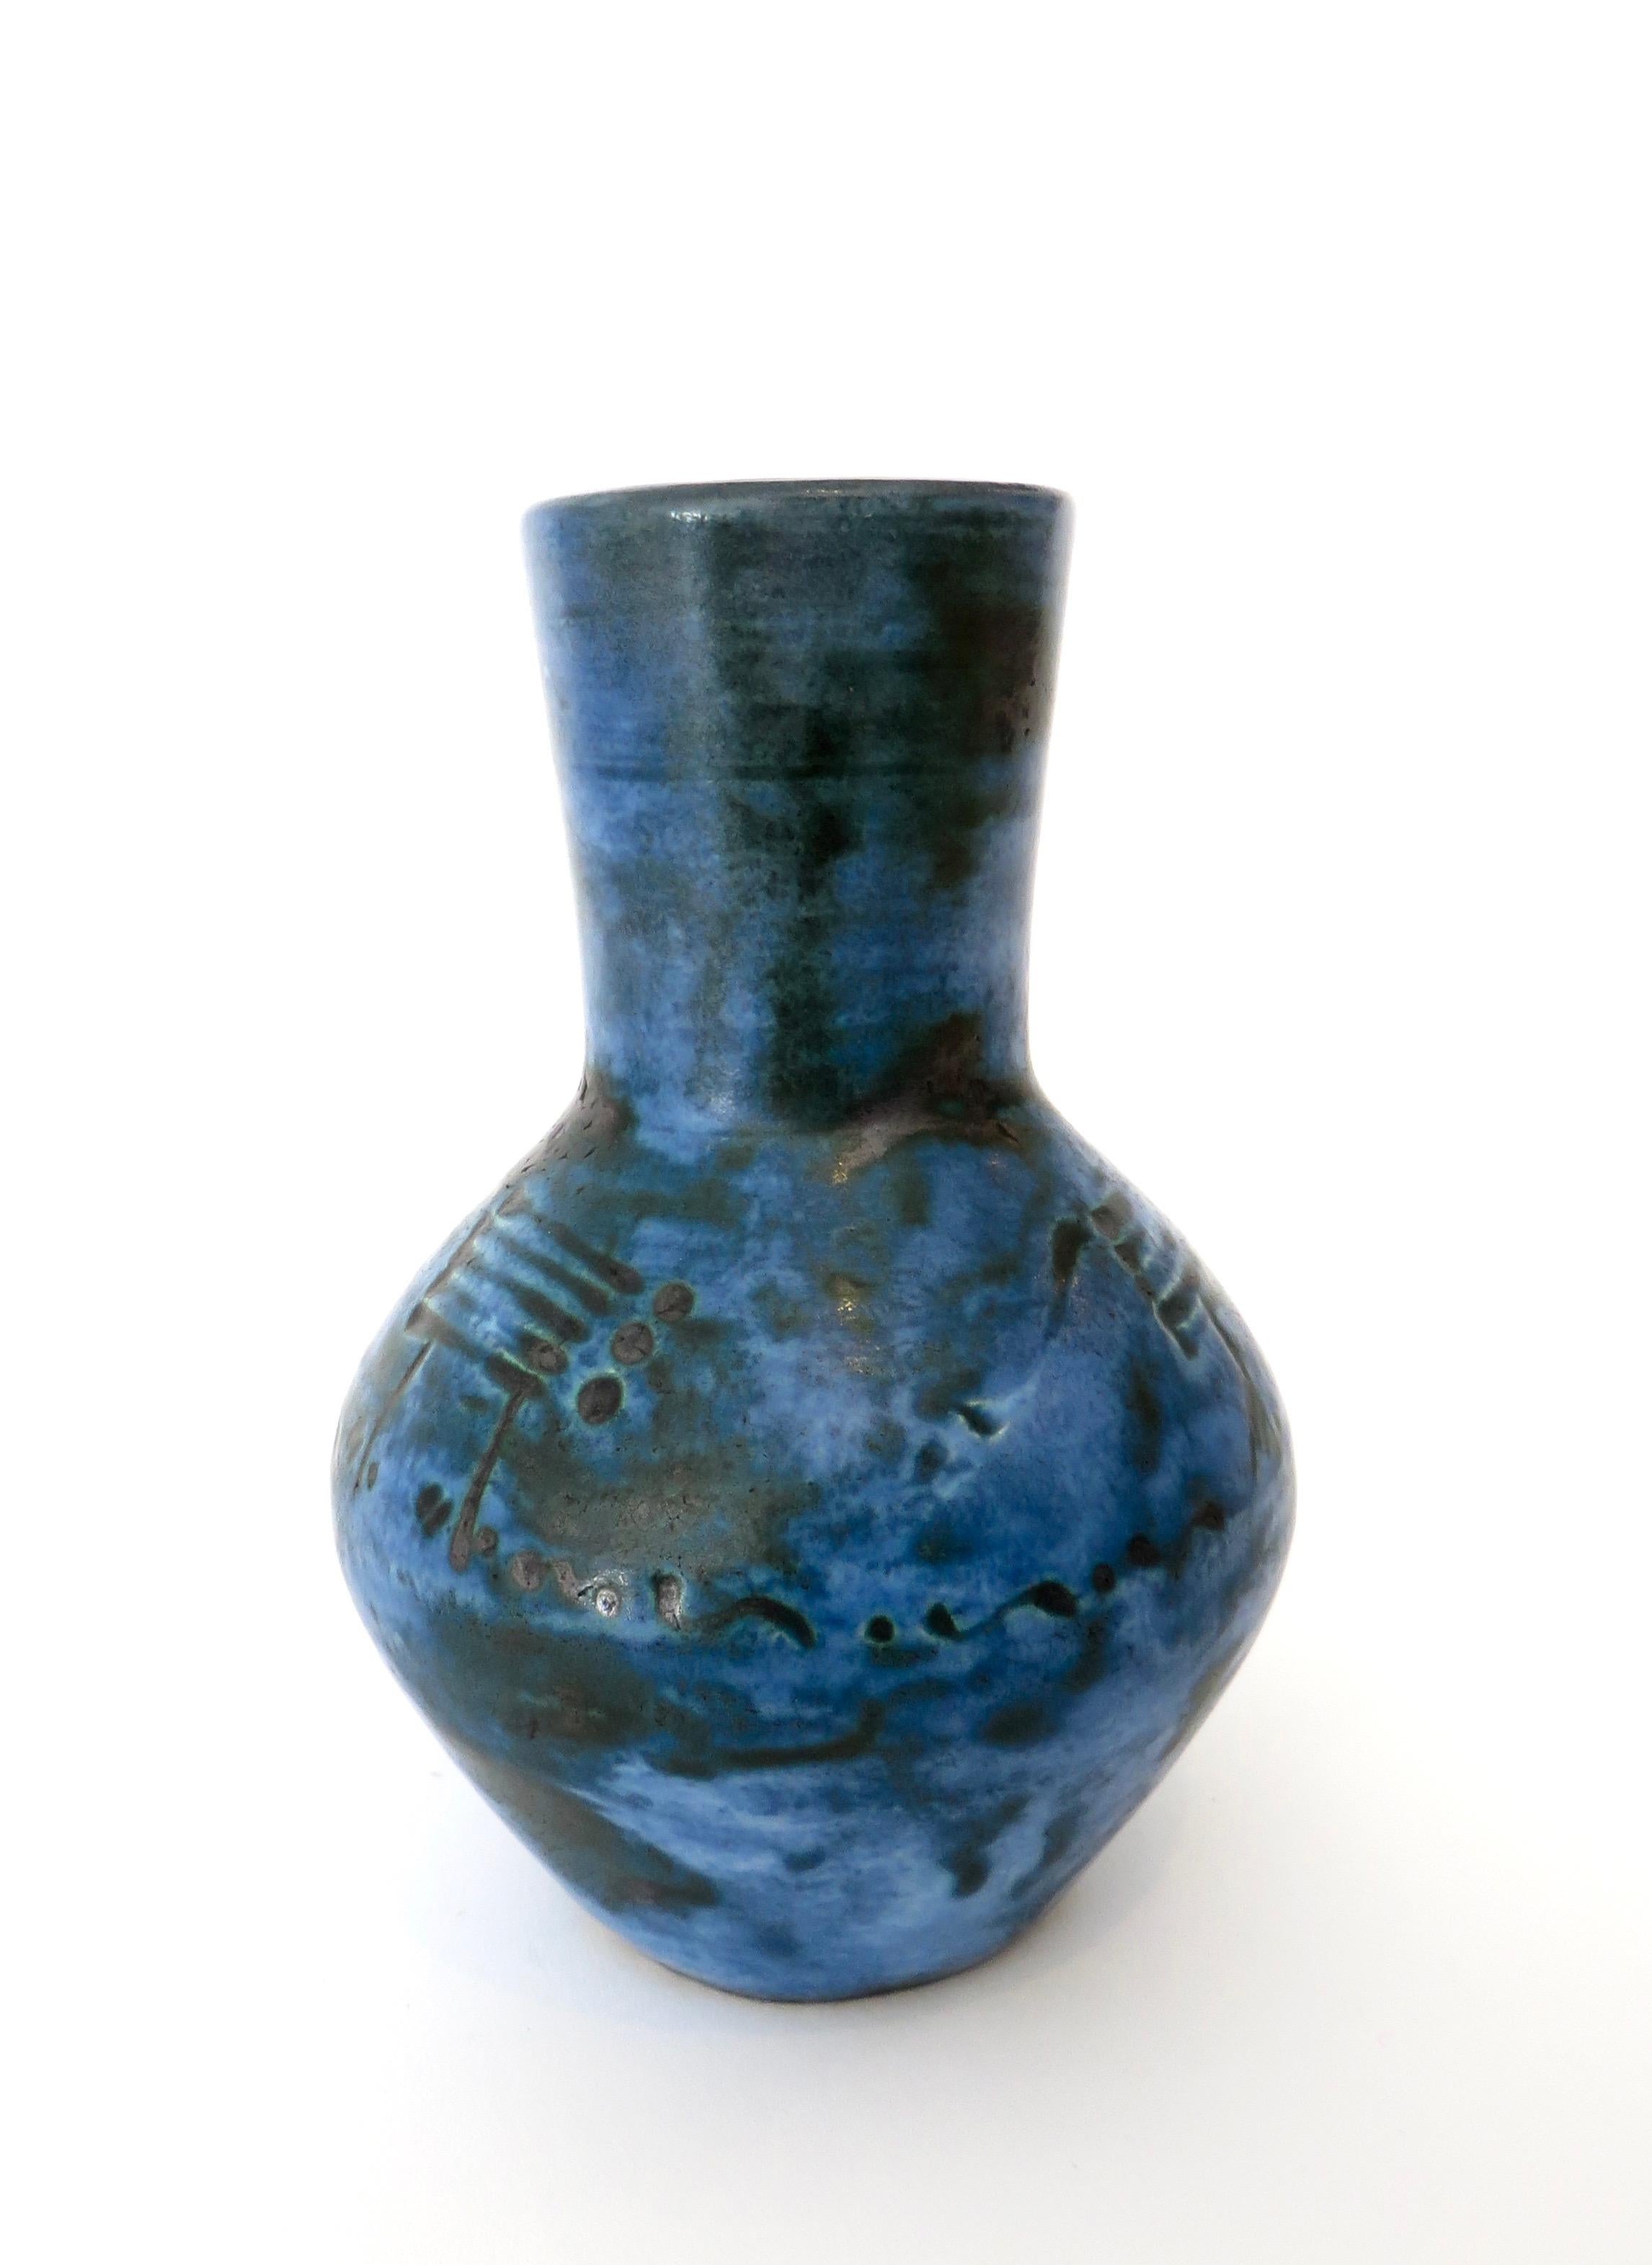  Jacques Blin French Dark Blue Ceramic Ceramic Vase with Sgraffito Decoration 1